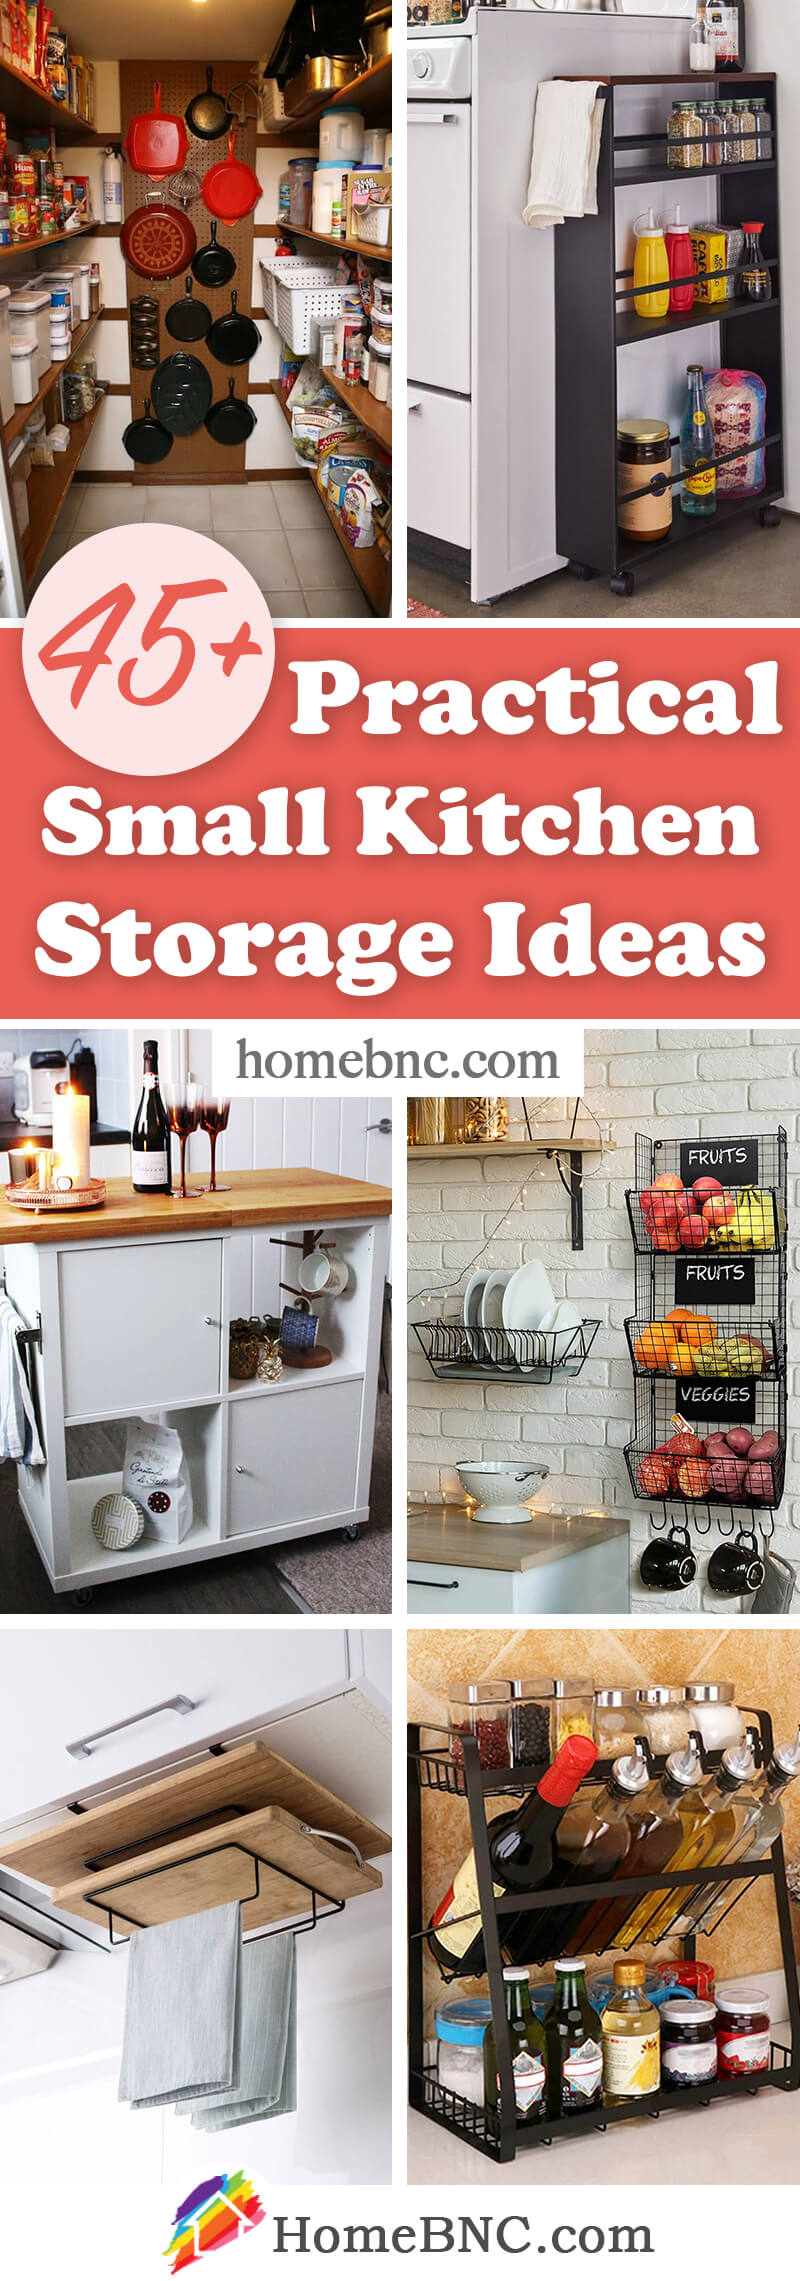 18+ Best Small Kitchen Storage Organization Ideas and Designs for 18